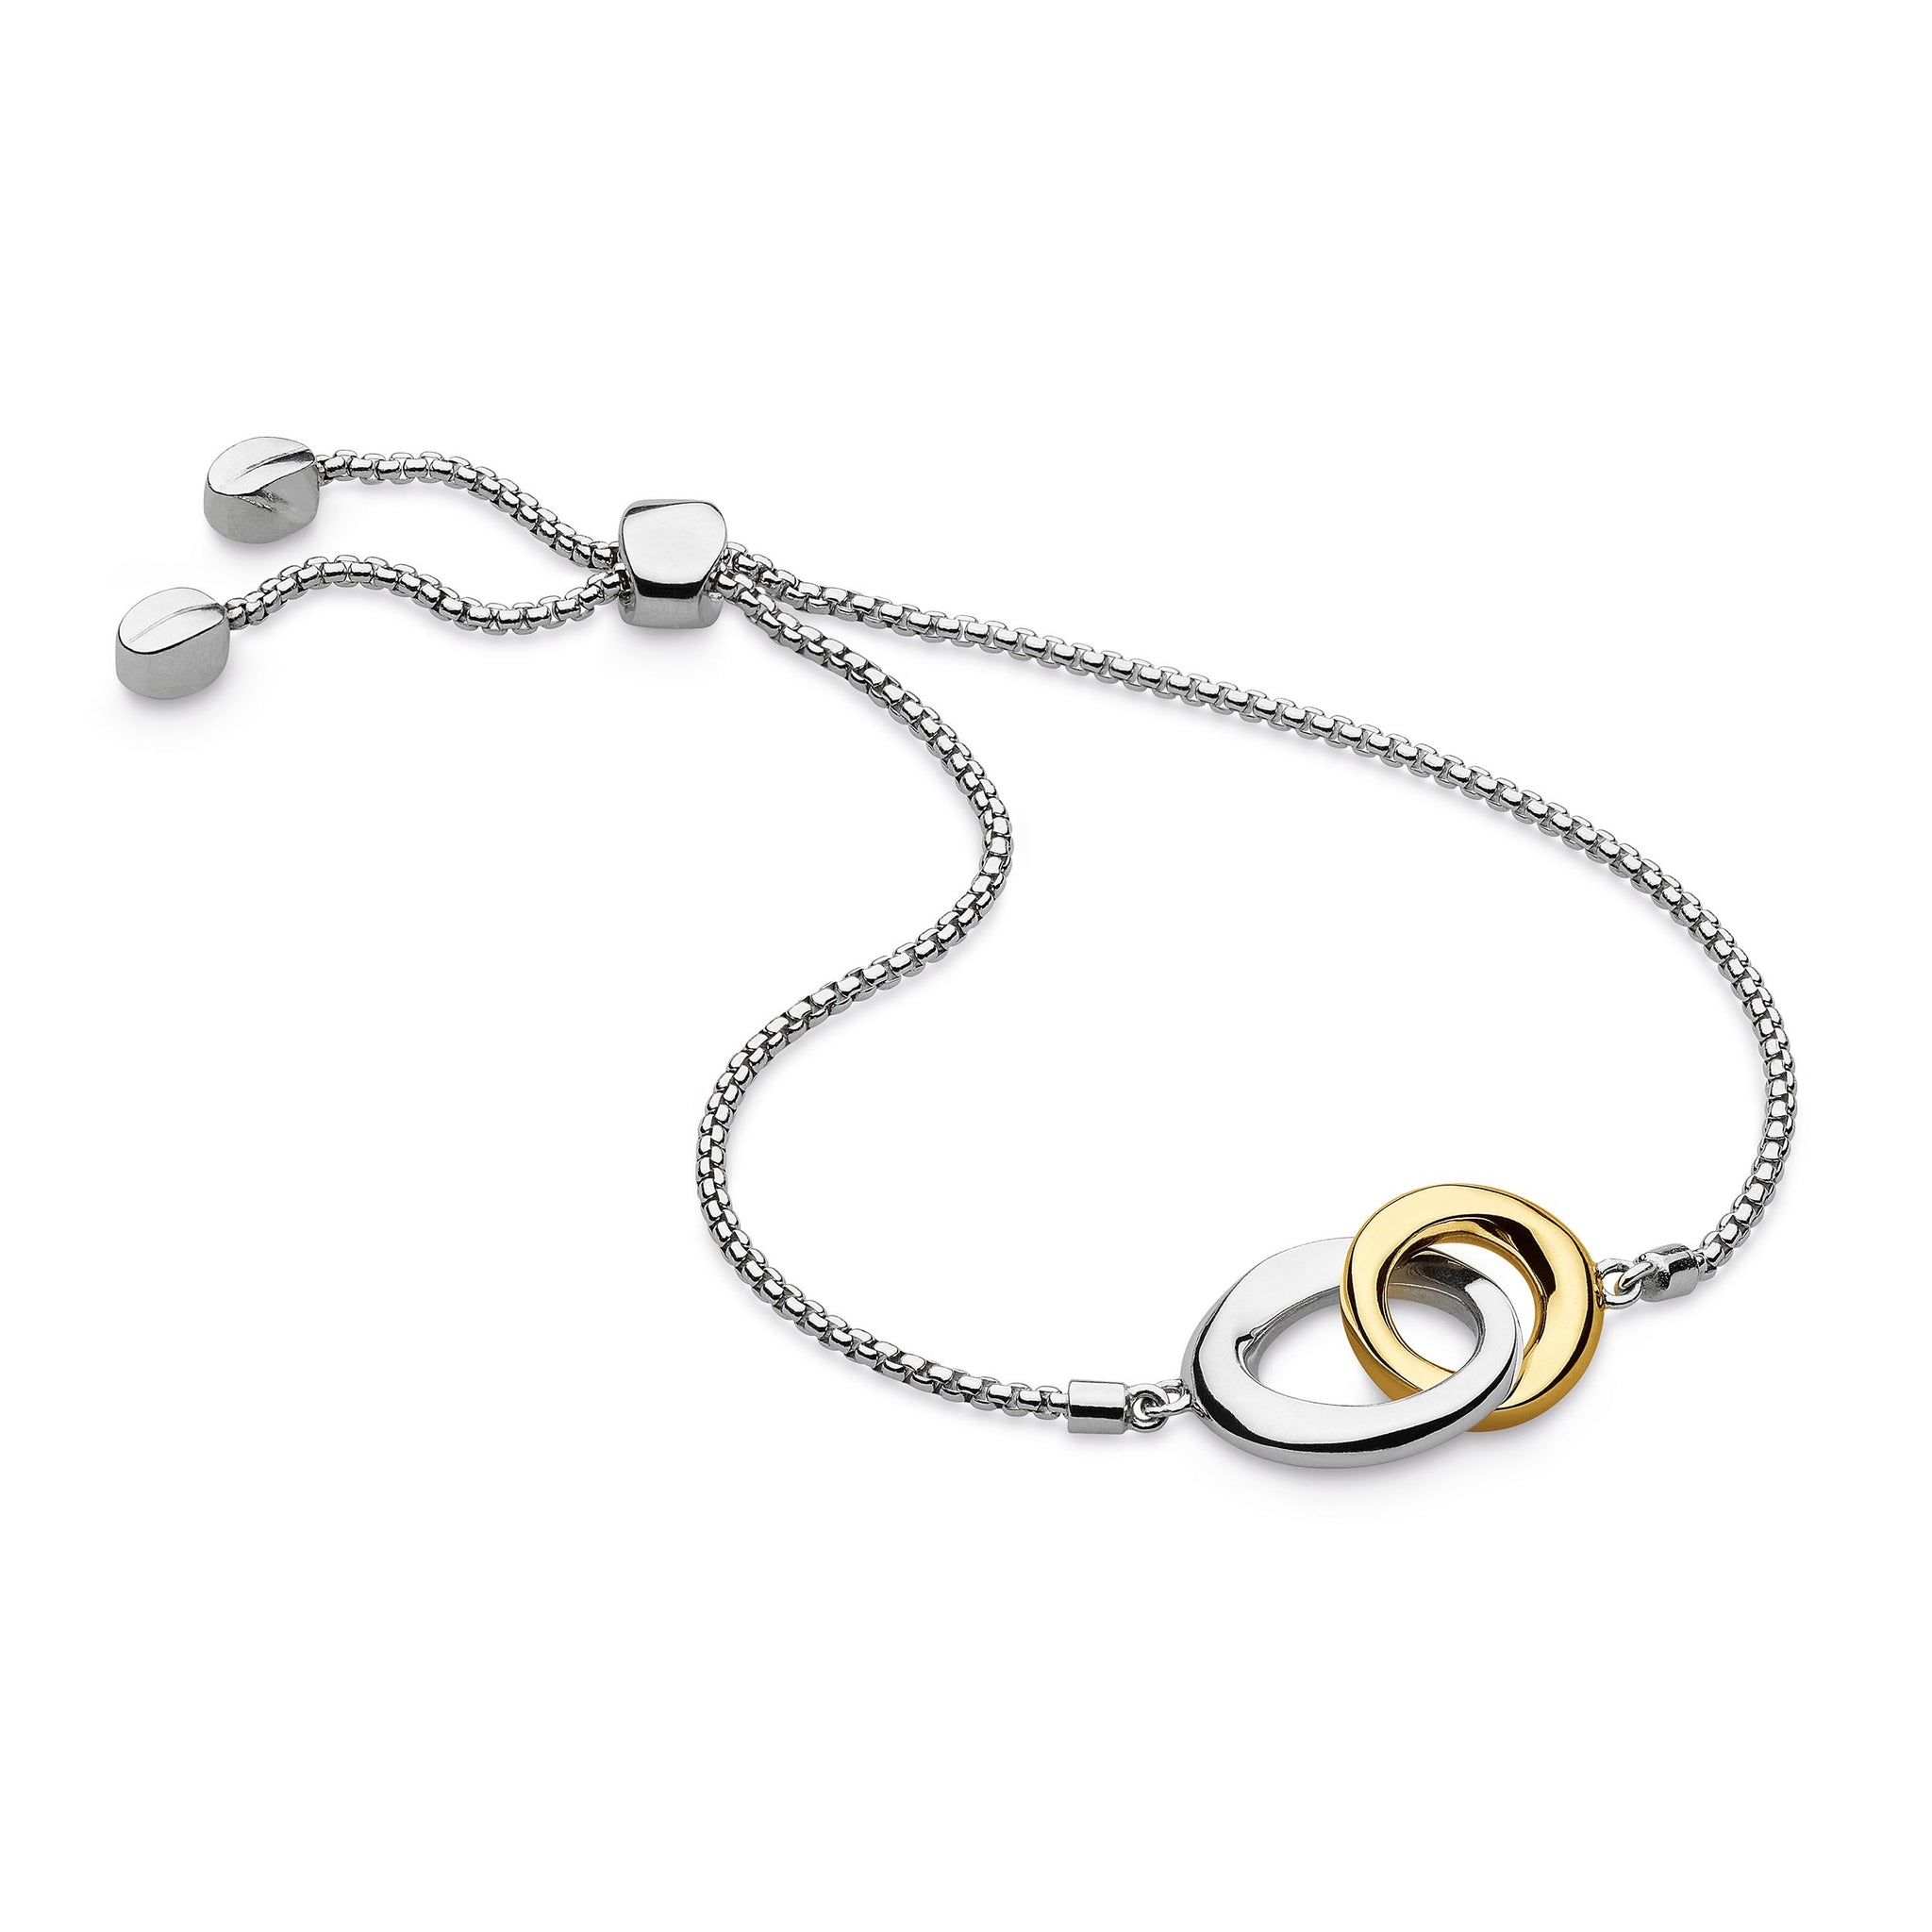 Kit Heath 18ct Gold & Silver Bevel Toggle Bracelet